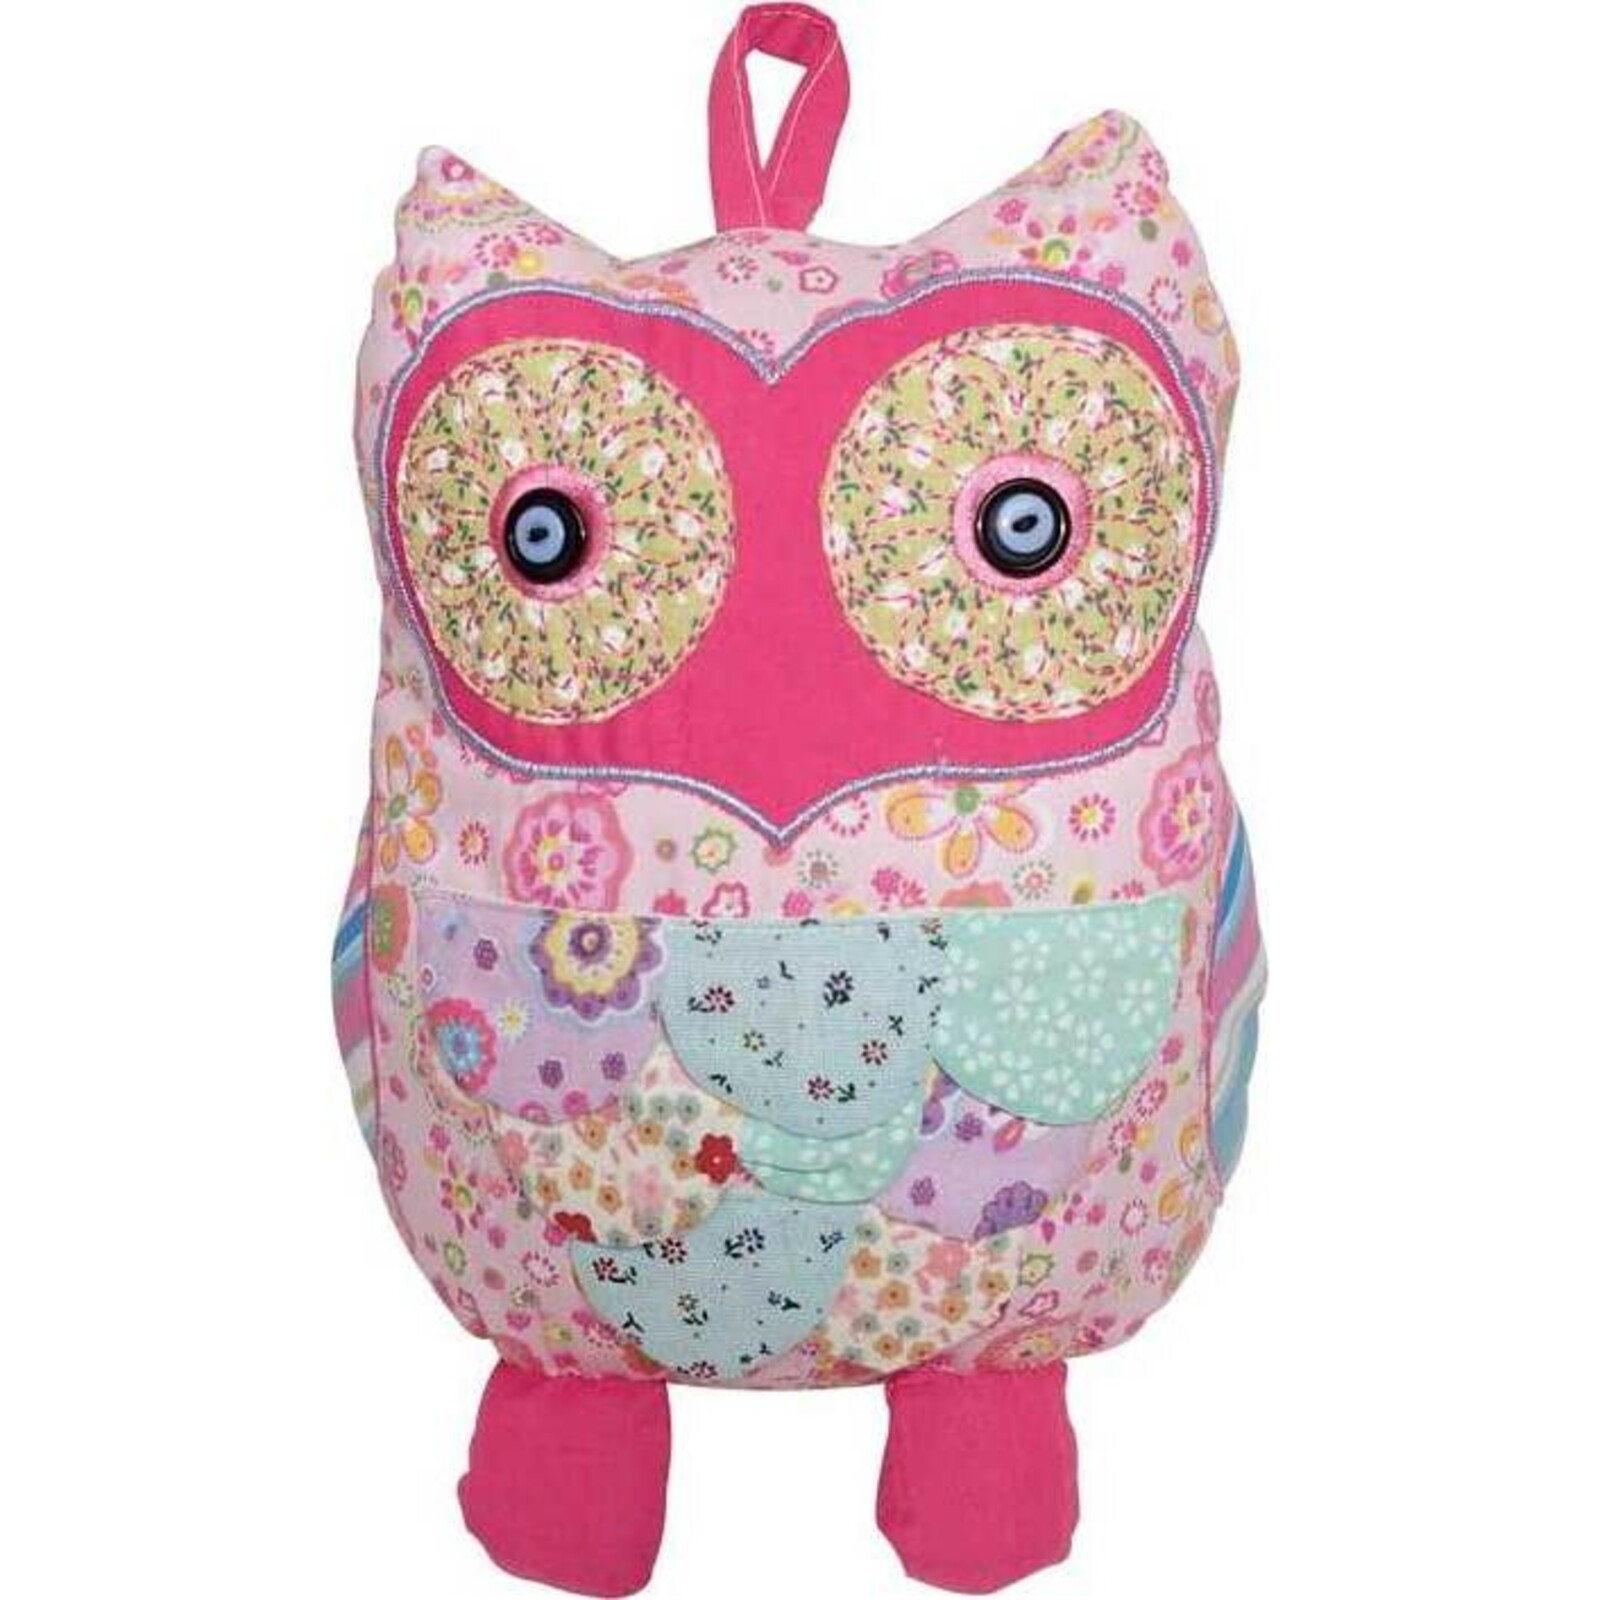 Doorstop/Cushion - Bright Pink Owl